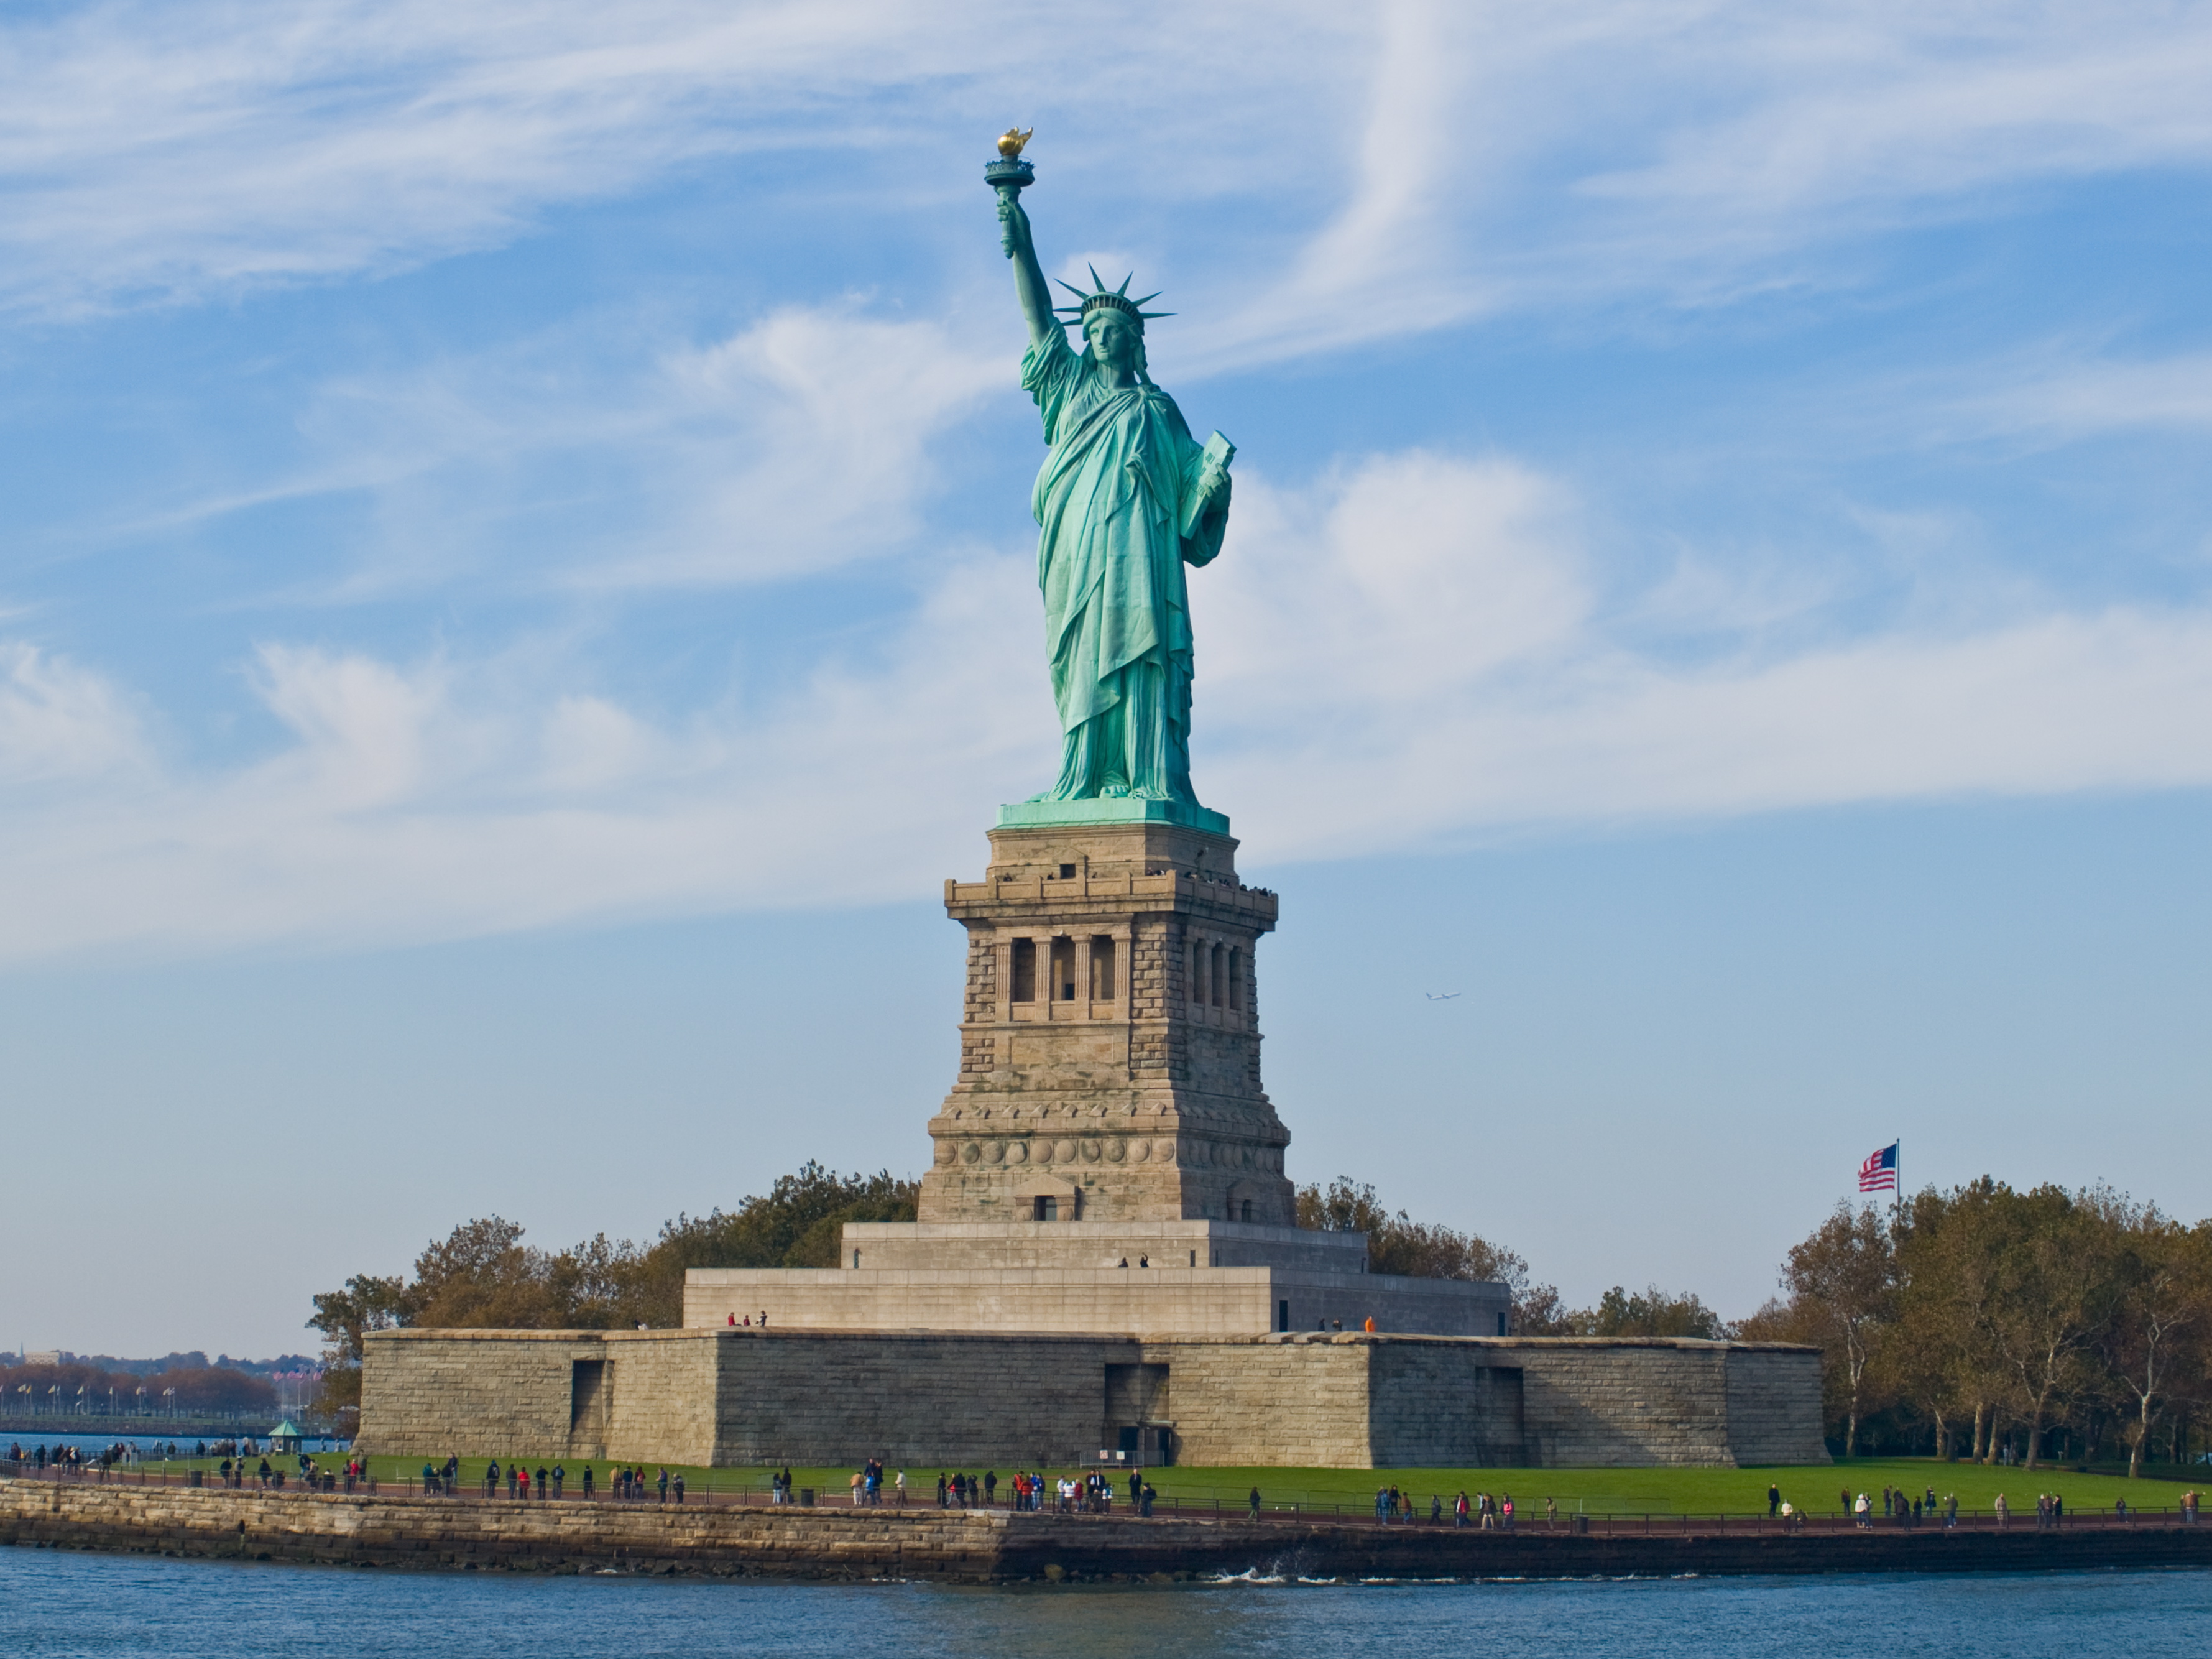 File:Statue of Liberty, NY.jpg - Wikimedia Commons